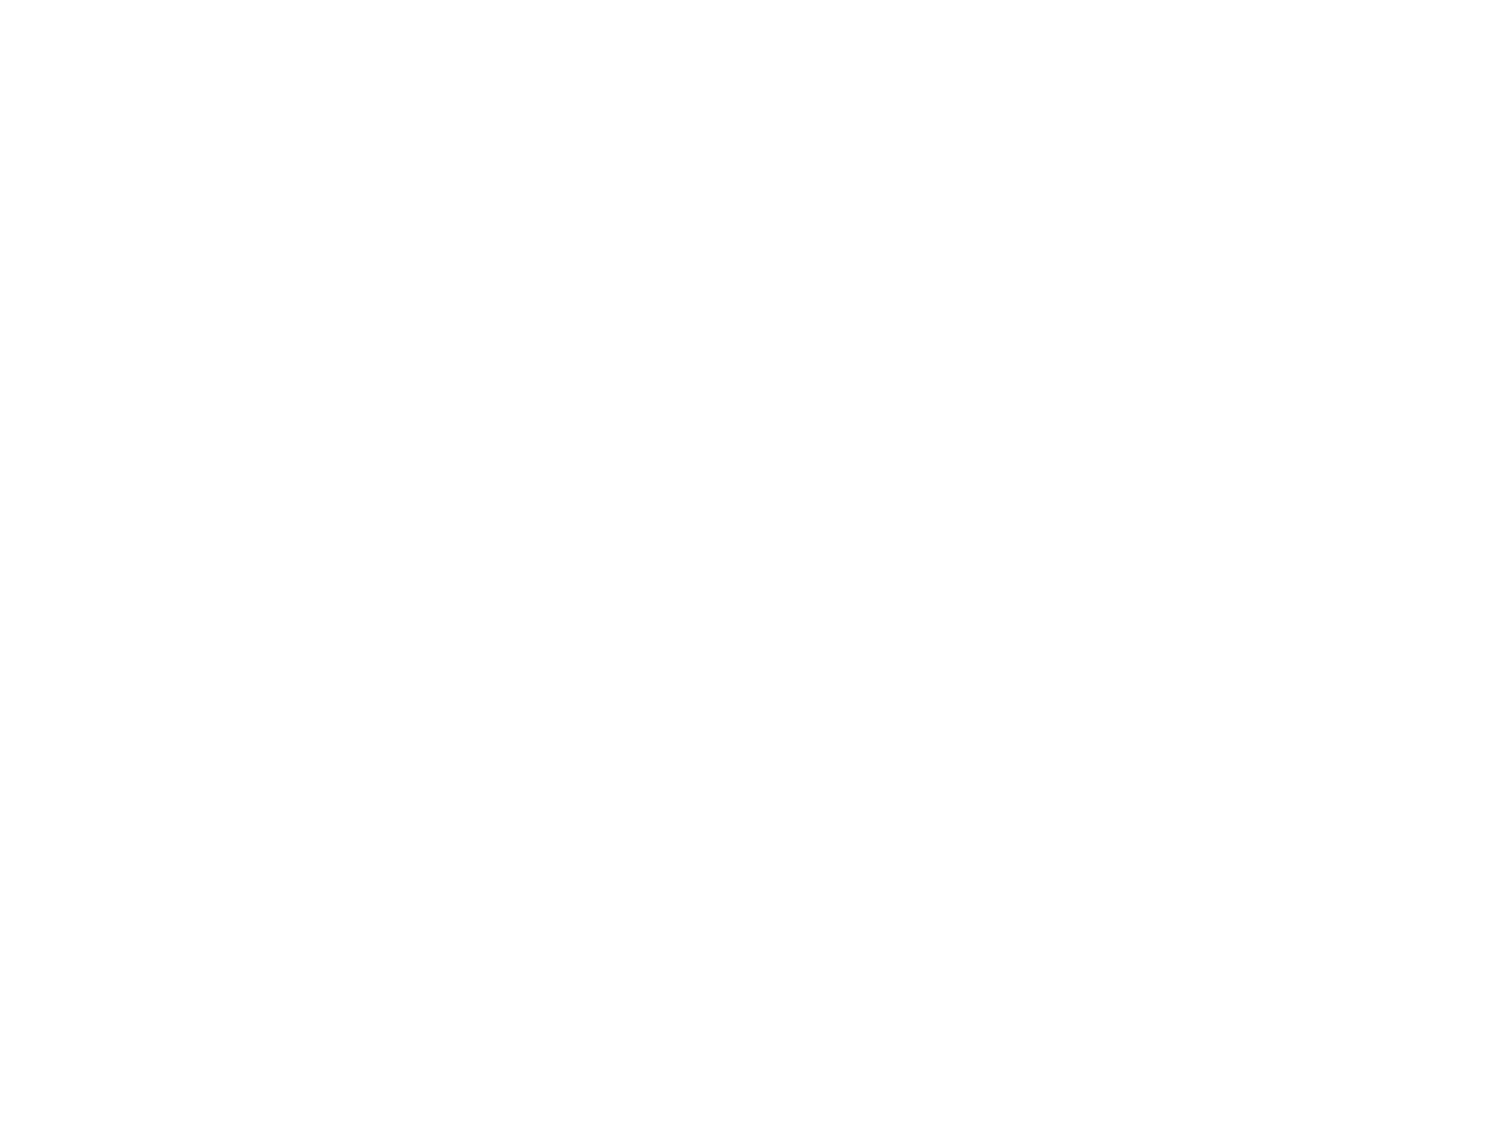 CONLEY PONDS